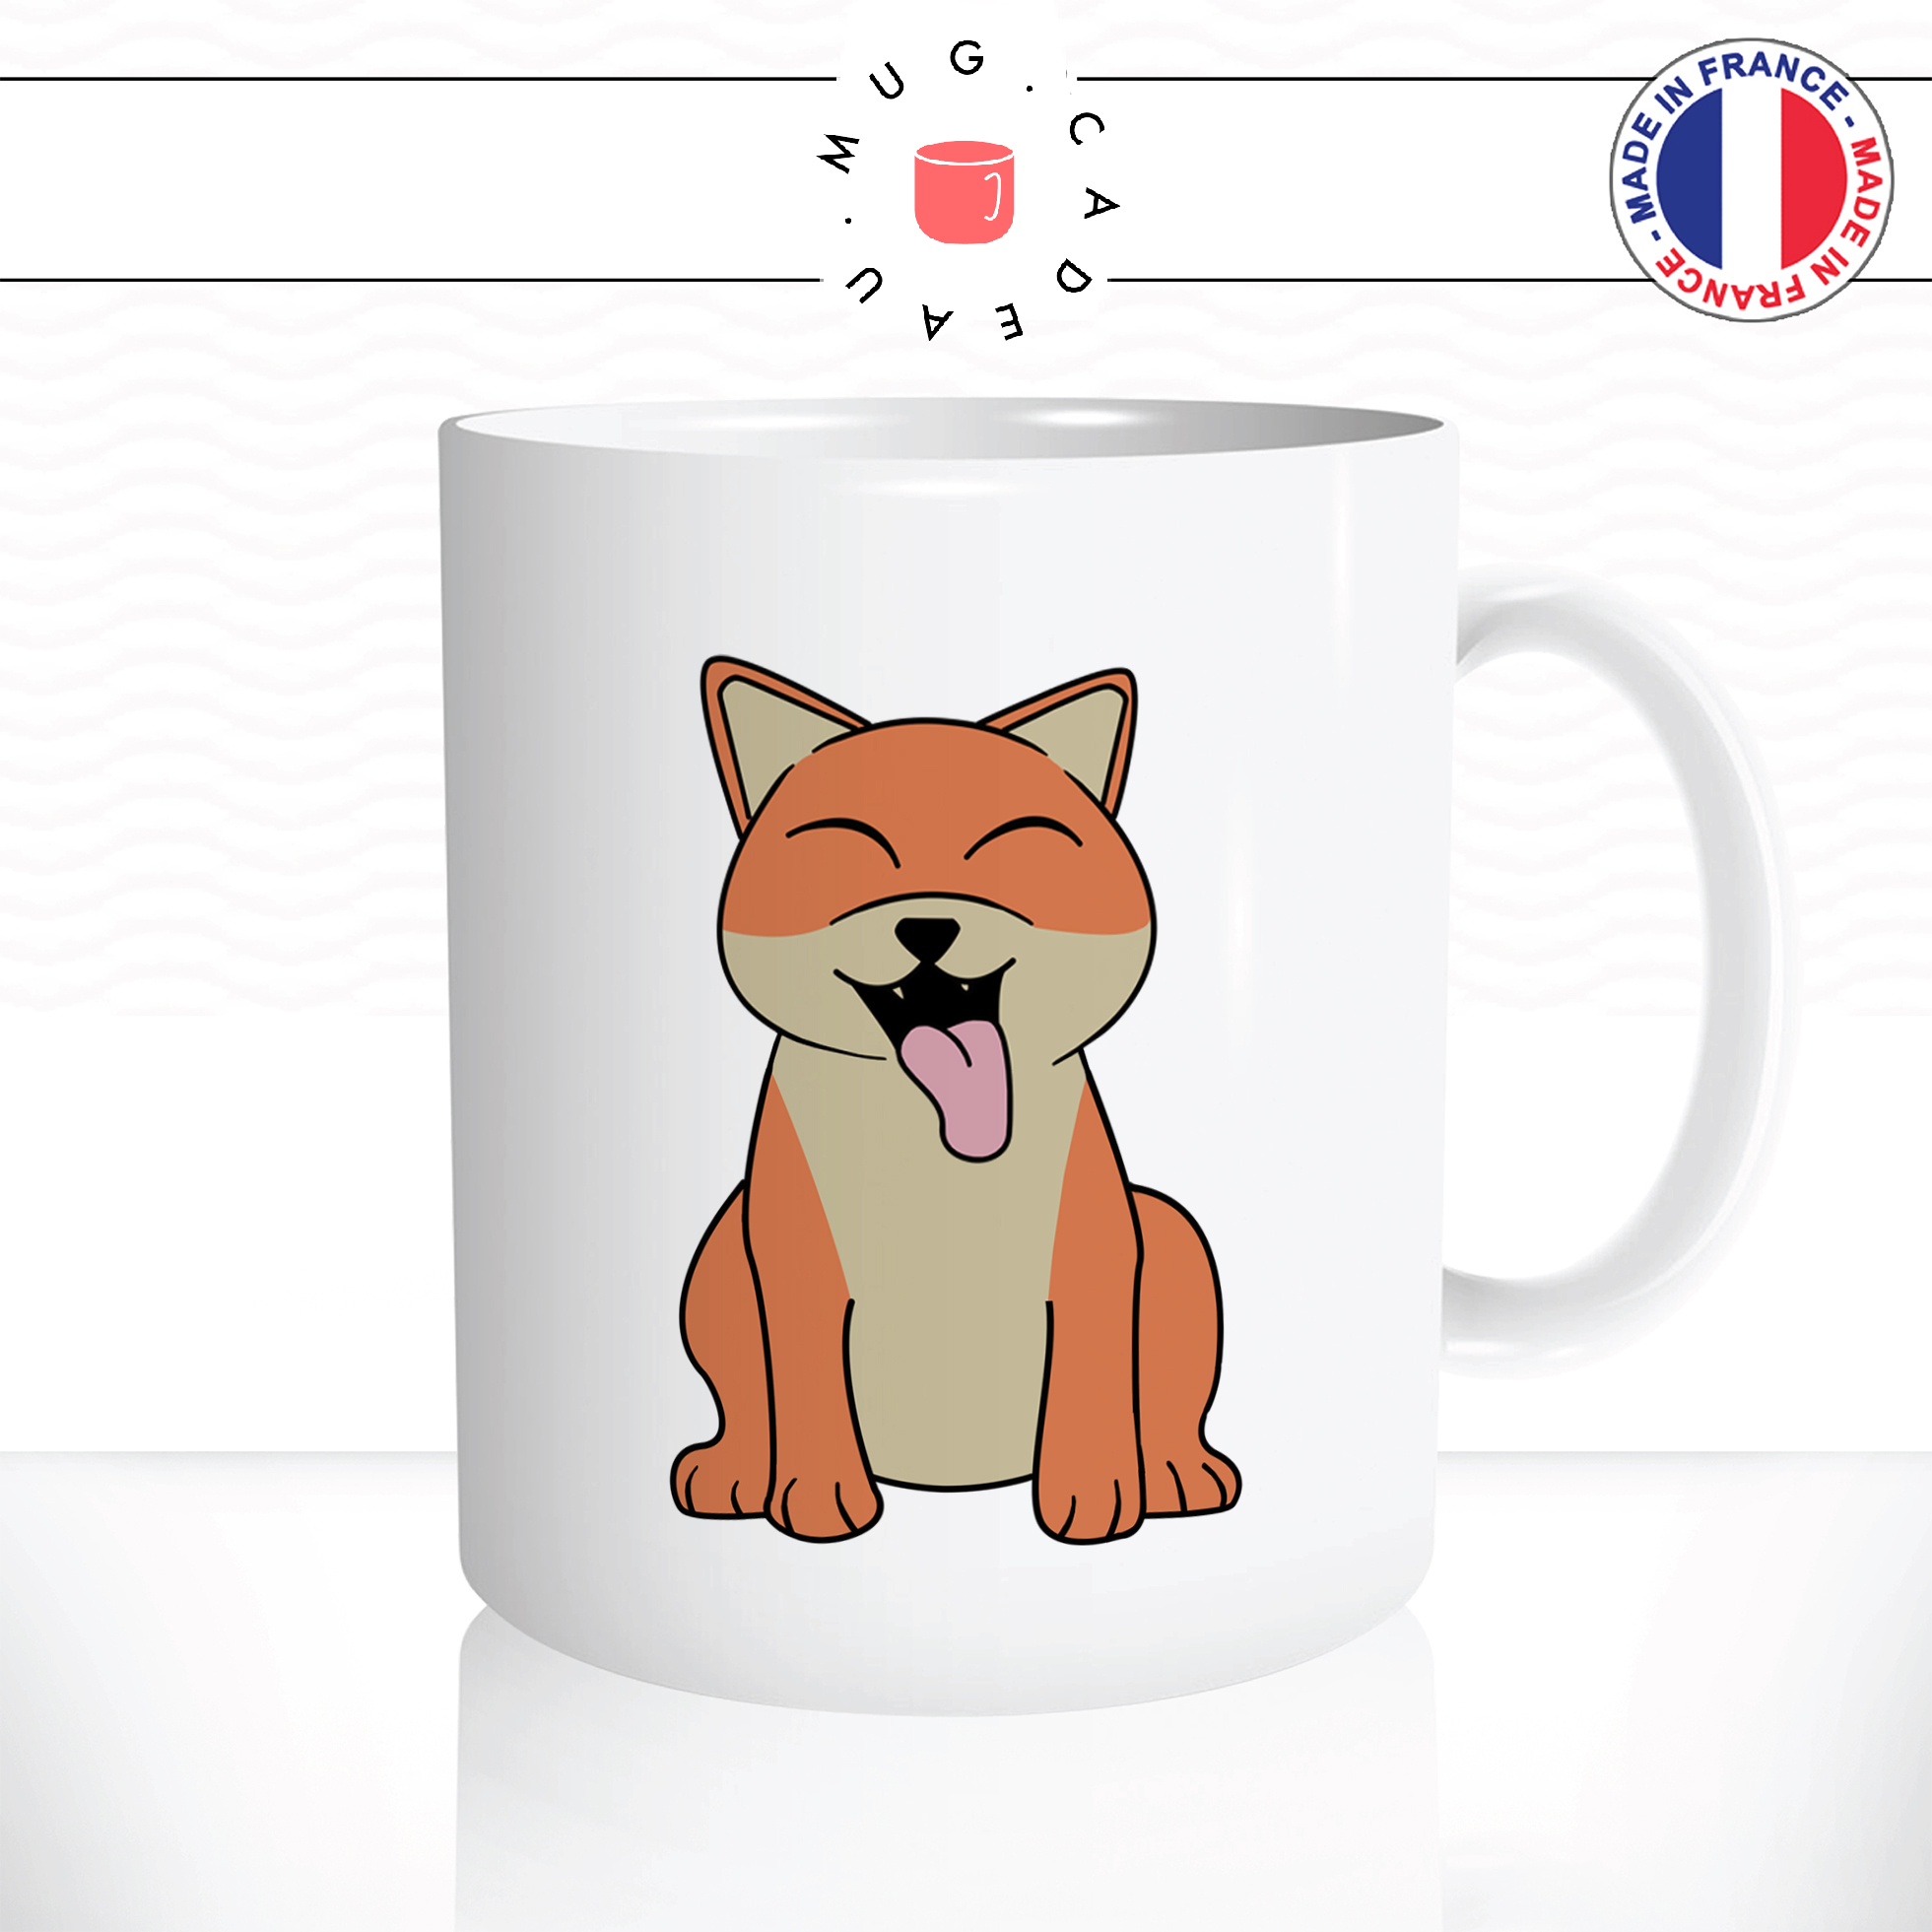 mug-tasse-ref18-chien-shiba-dessin-langue-mignon-orange-cafe-the-mugs-tasses-personnalise-anse-droite